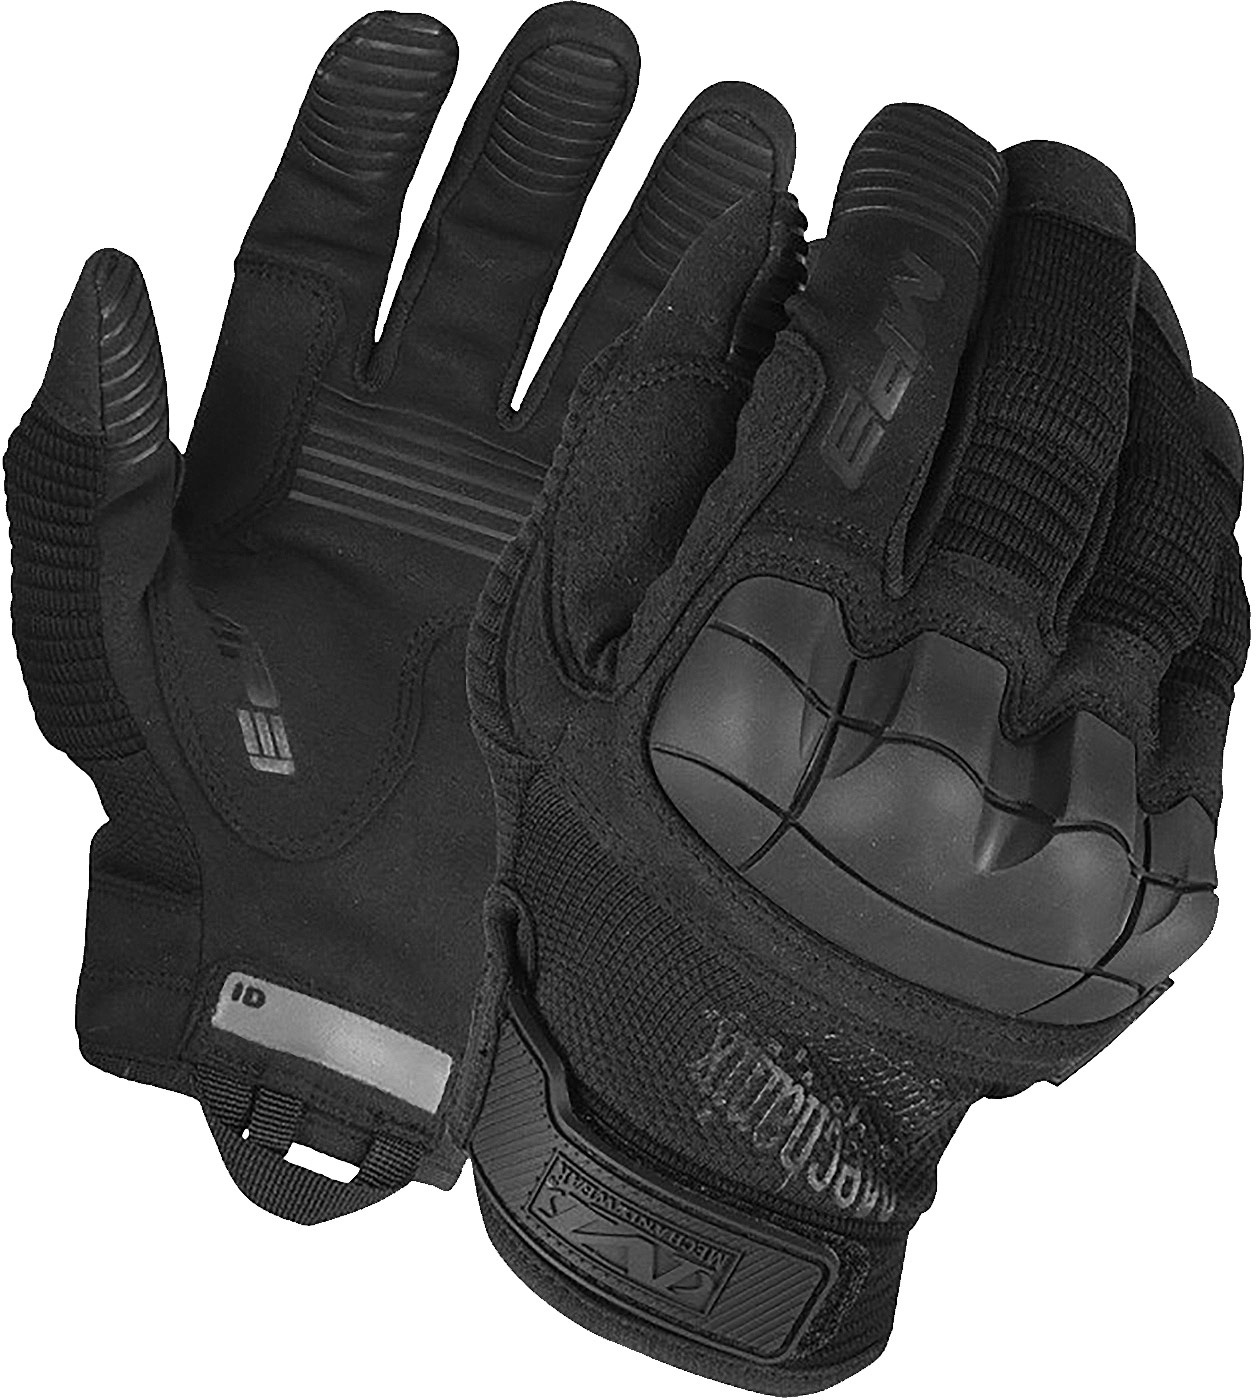 Mechanix Handschuhe M-Pact 3 schwarz, Größe S/7